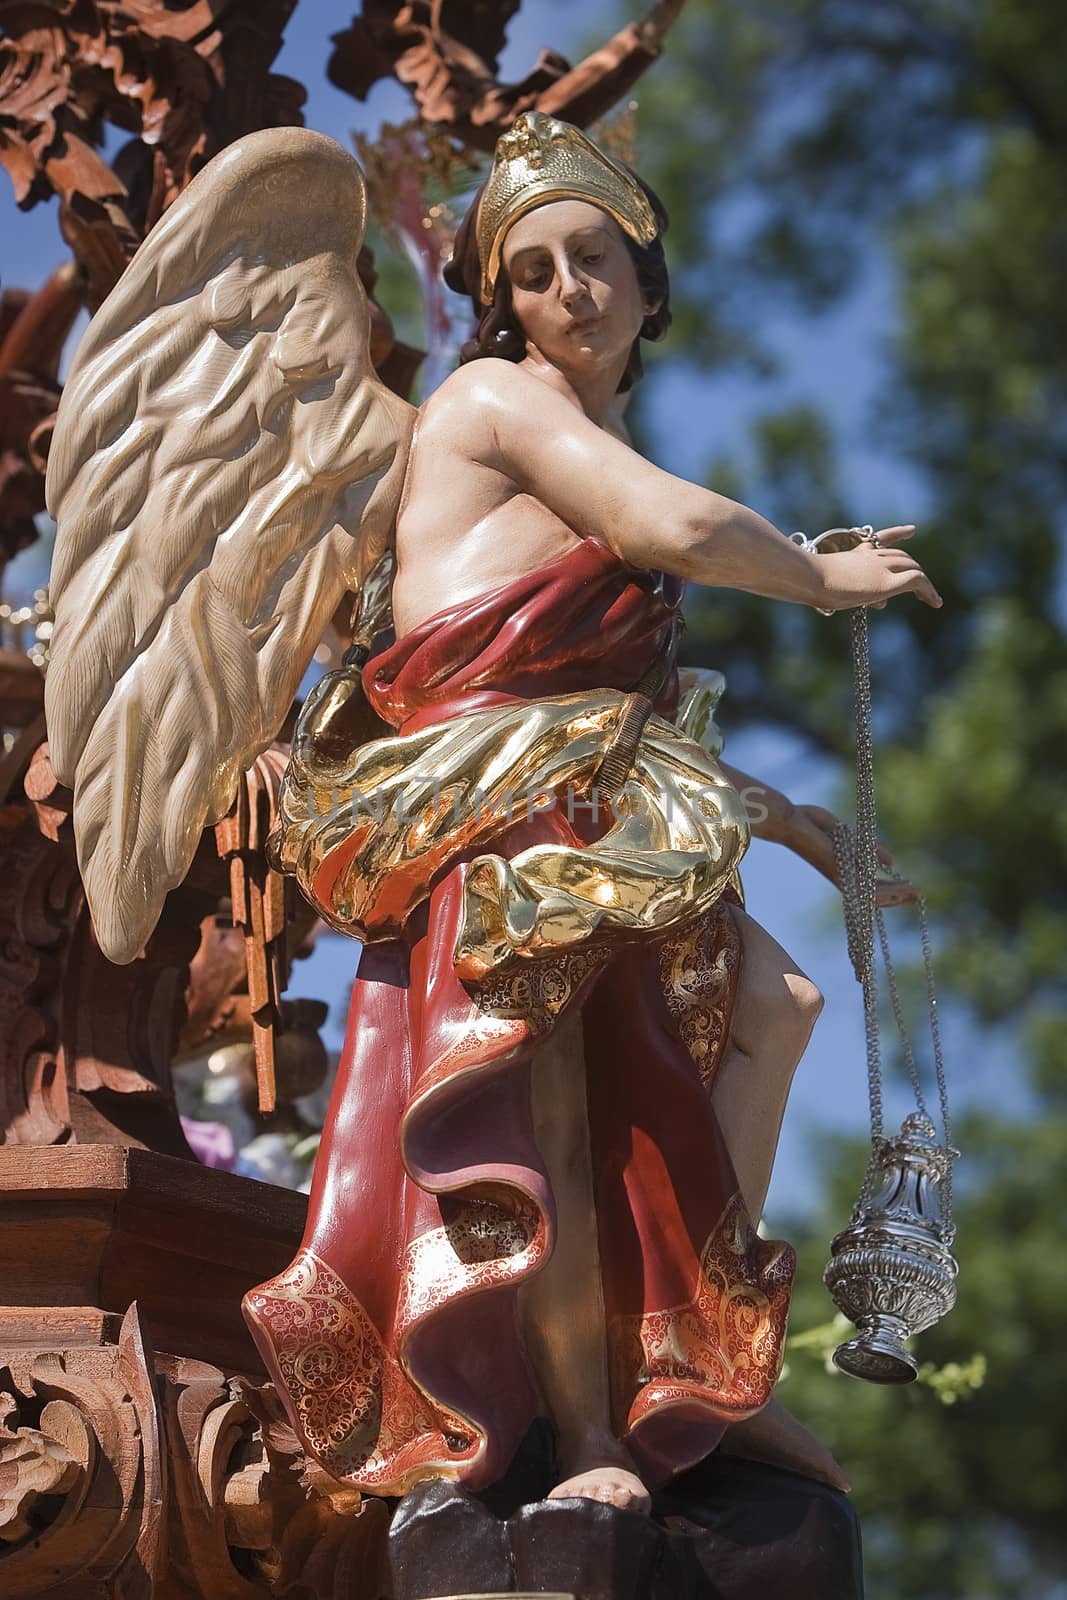 Archangel sculpted in polychromatic cedar wood, art of baroque style in Holy Week, Spain